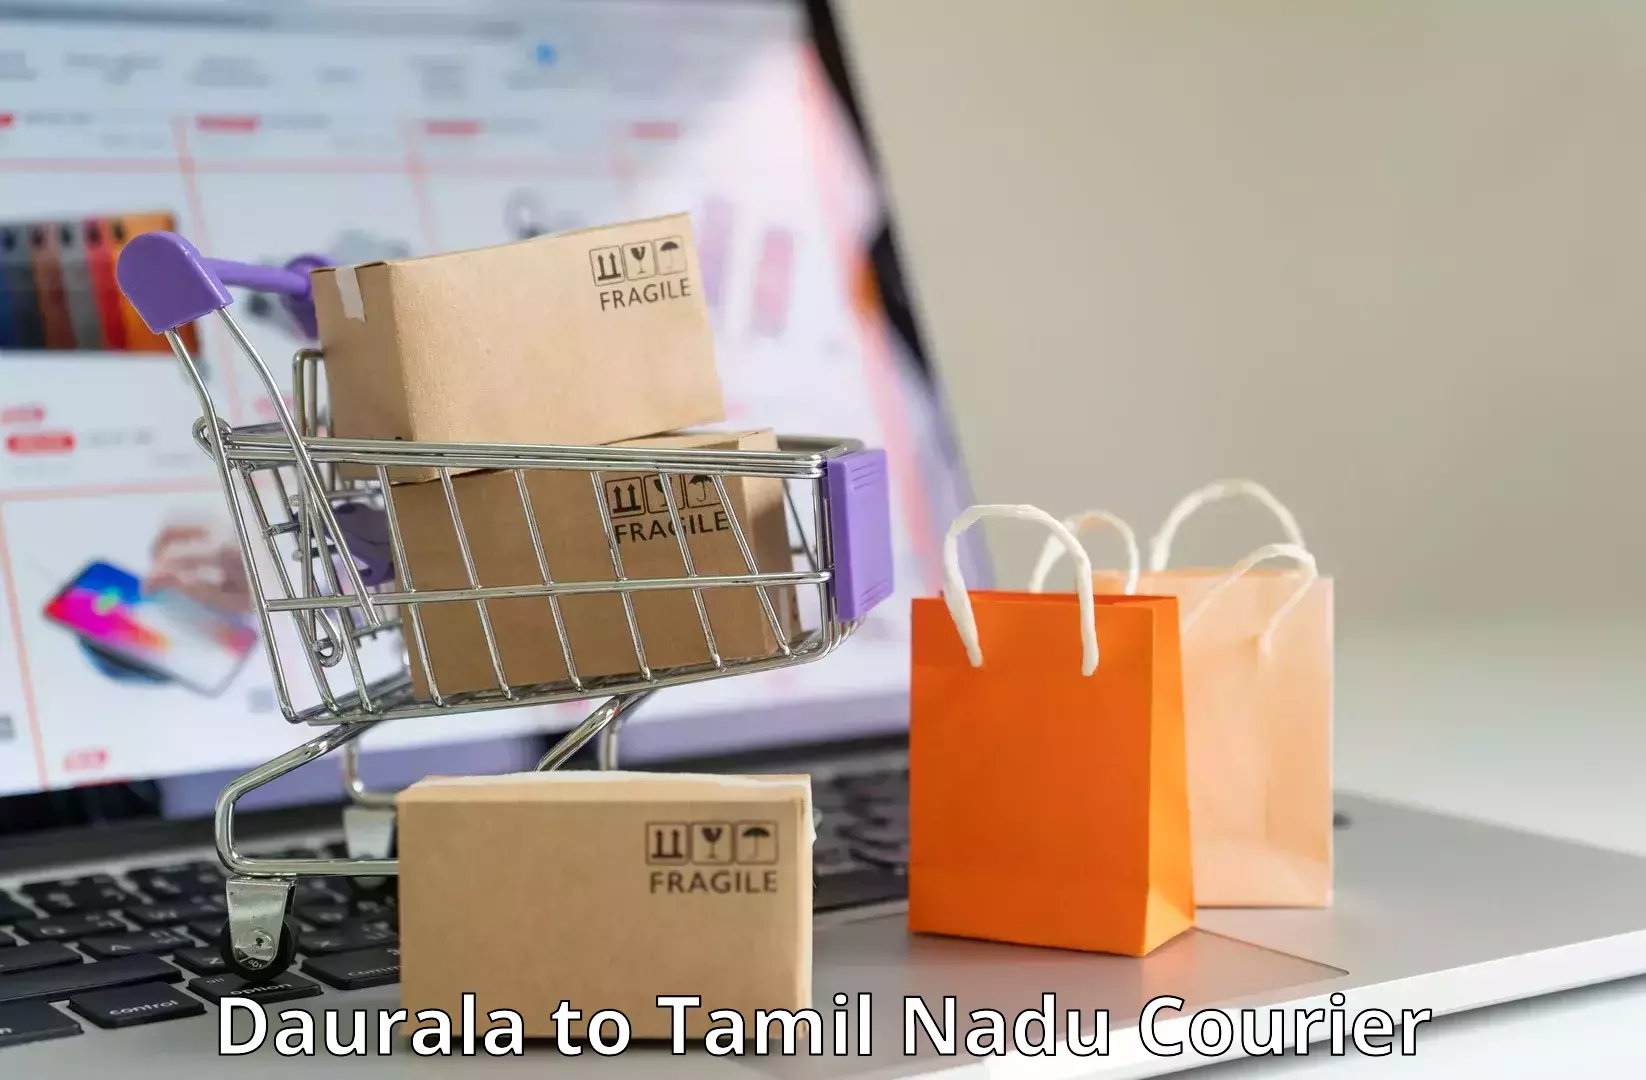 Next-day delivery options Daurala to Villupuram